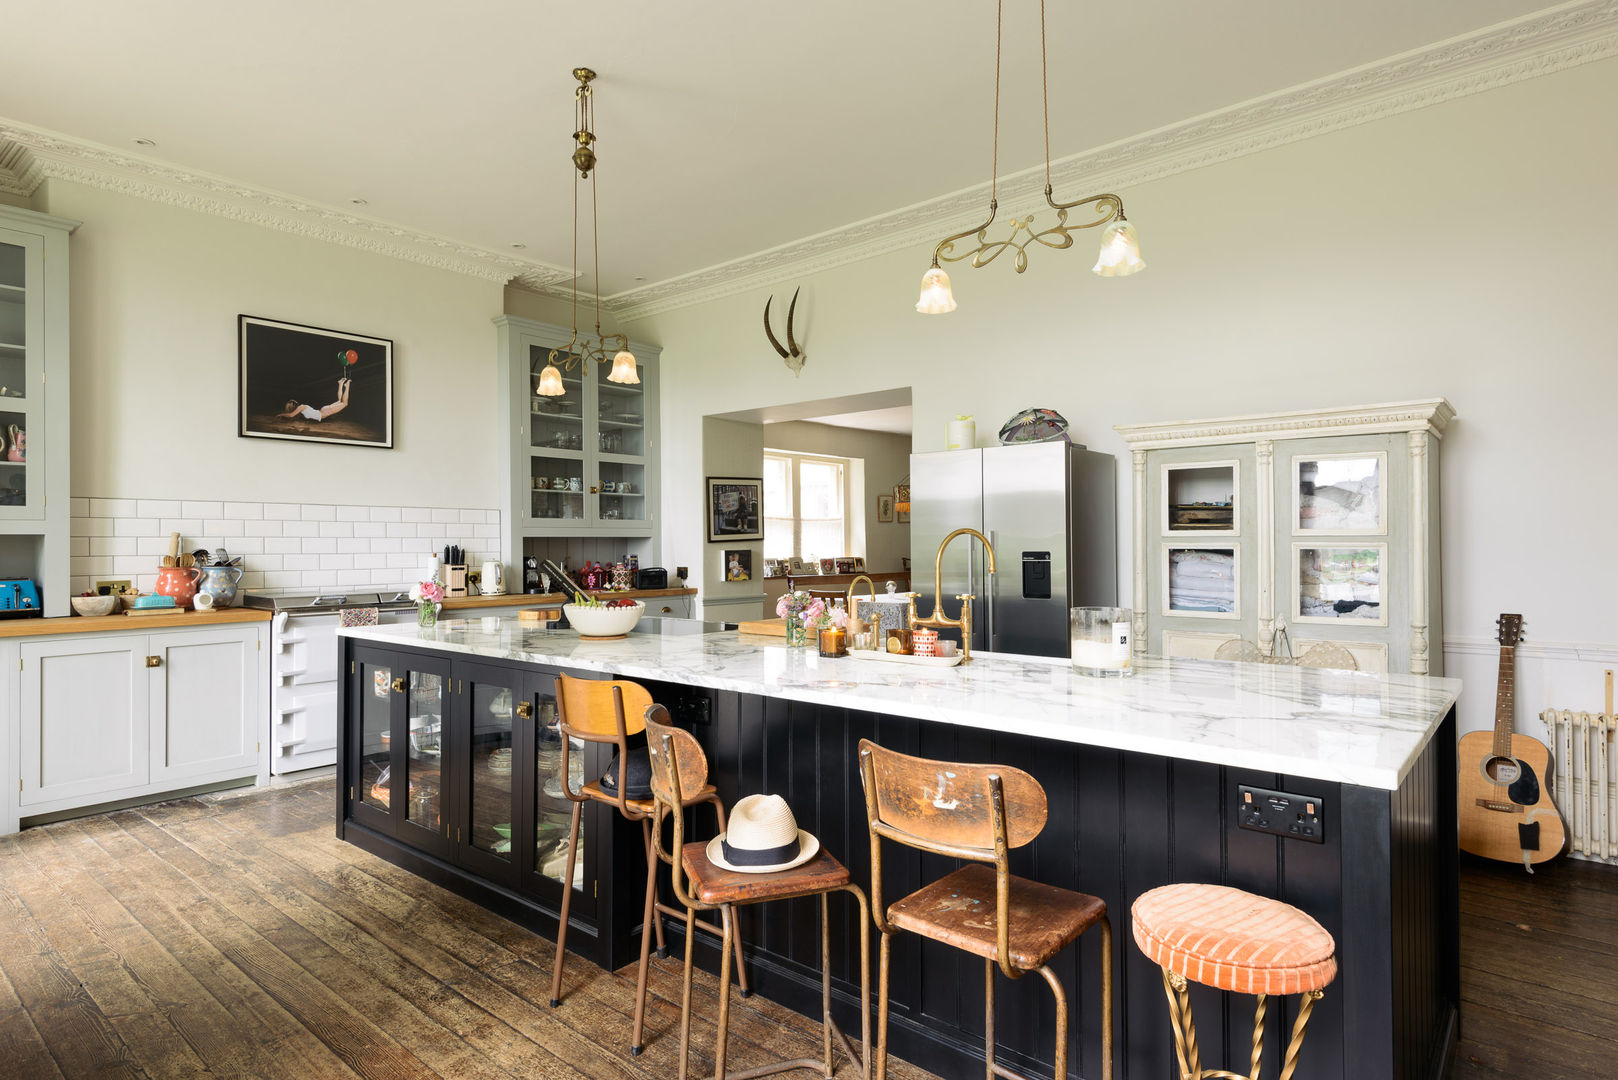 The Frome Kitchen by deVOL deVOL Kitchens مطبخ kitchen island,classic,eclectic,dark kitchens,marble,worktop